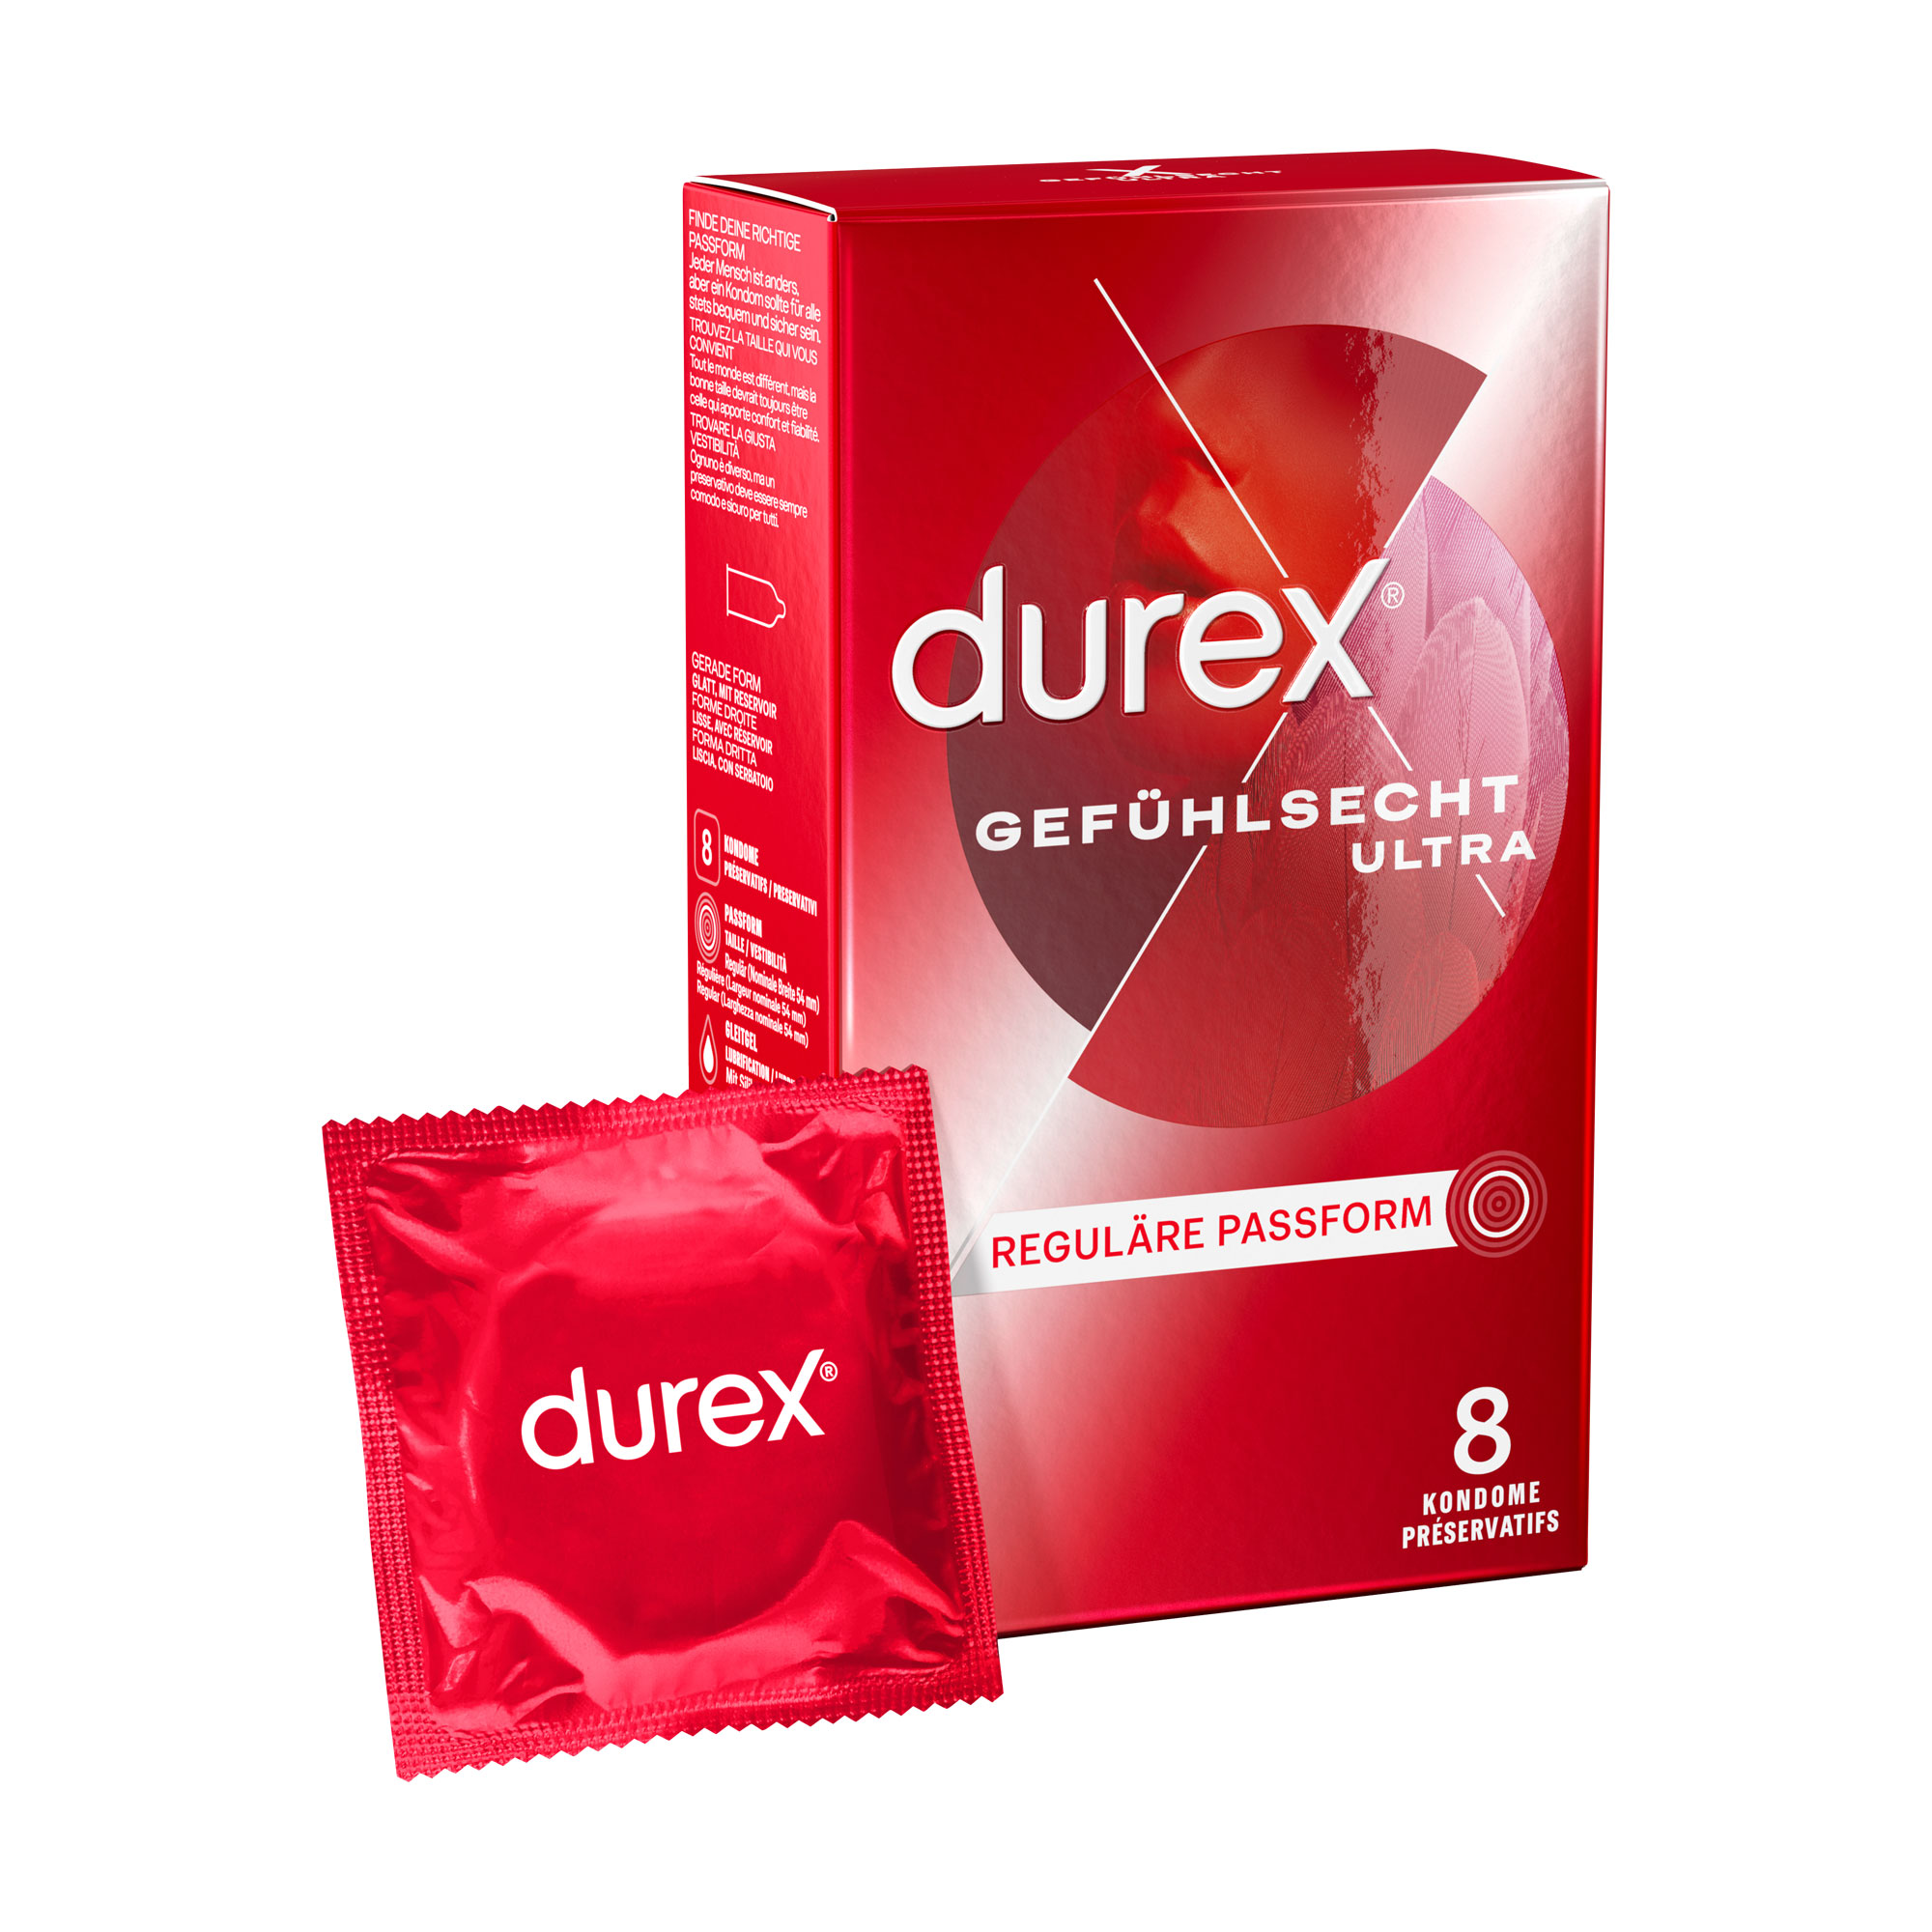 Kondome mit Naturkautschuklatex. Intensives Gefühl dank dünner Spitze.